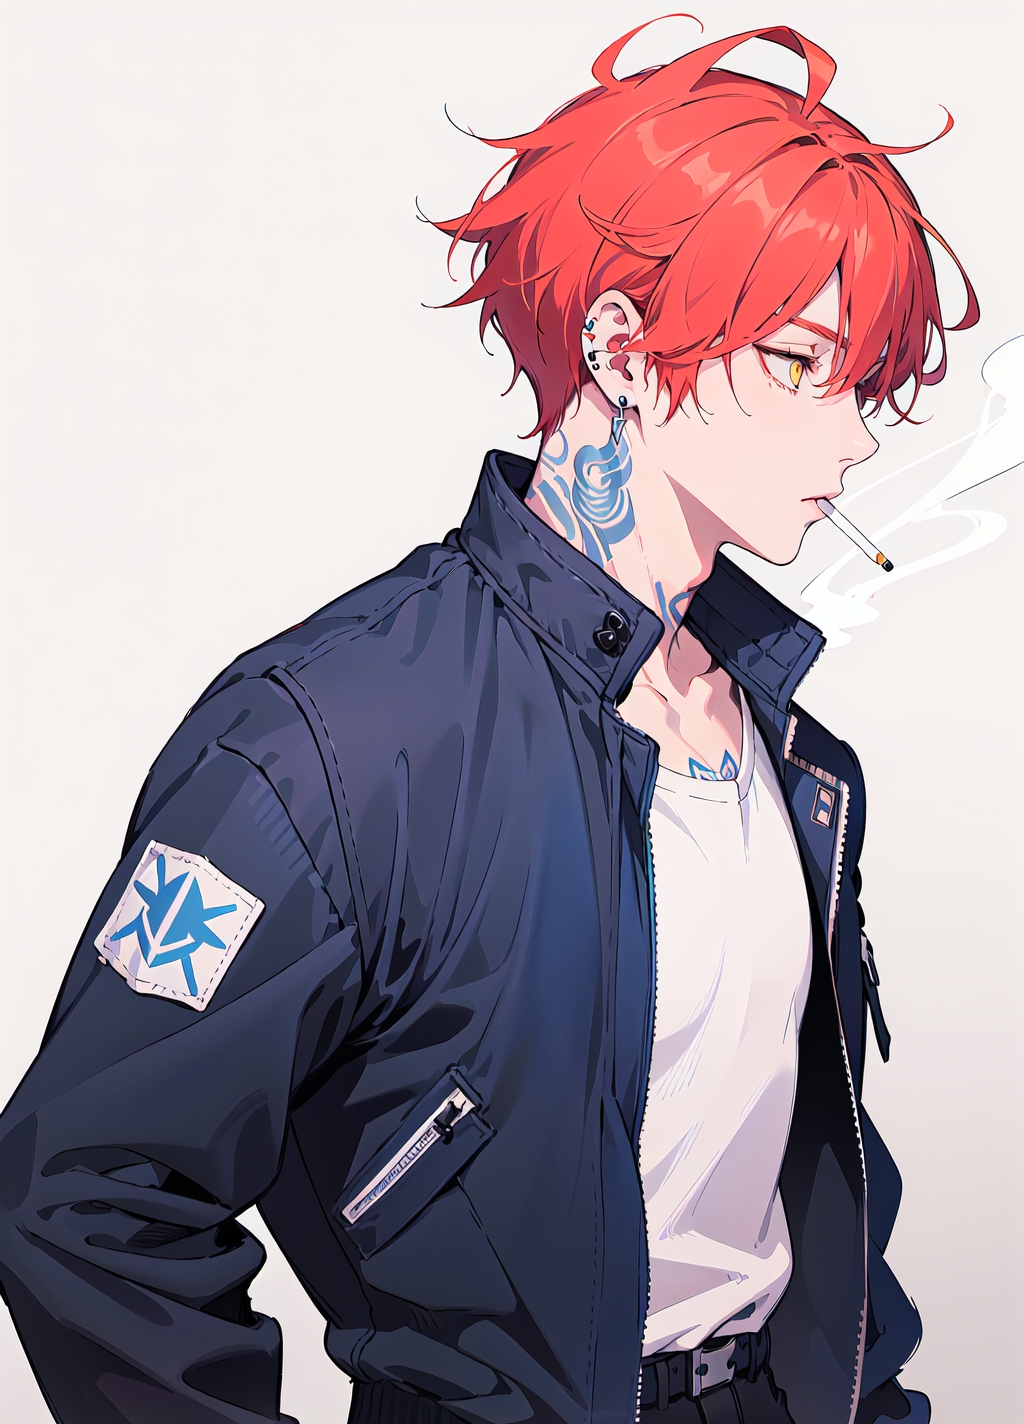 Anime boy with dark blue eyes and white spiky hair